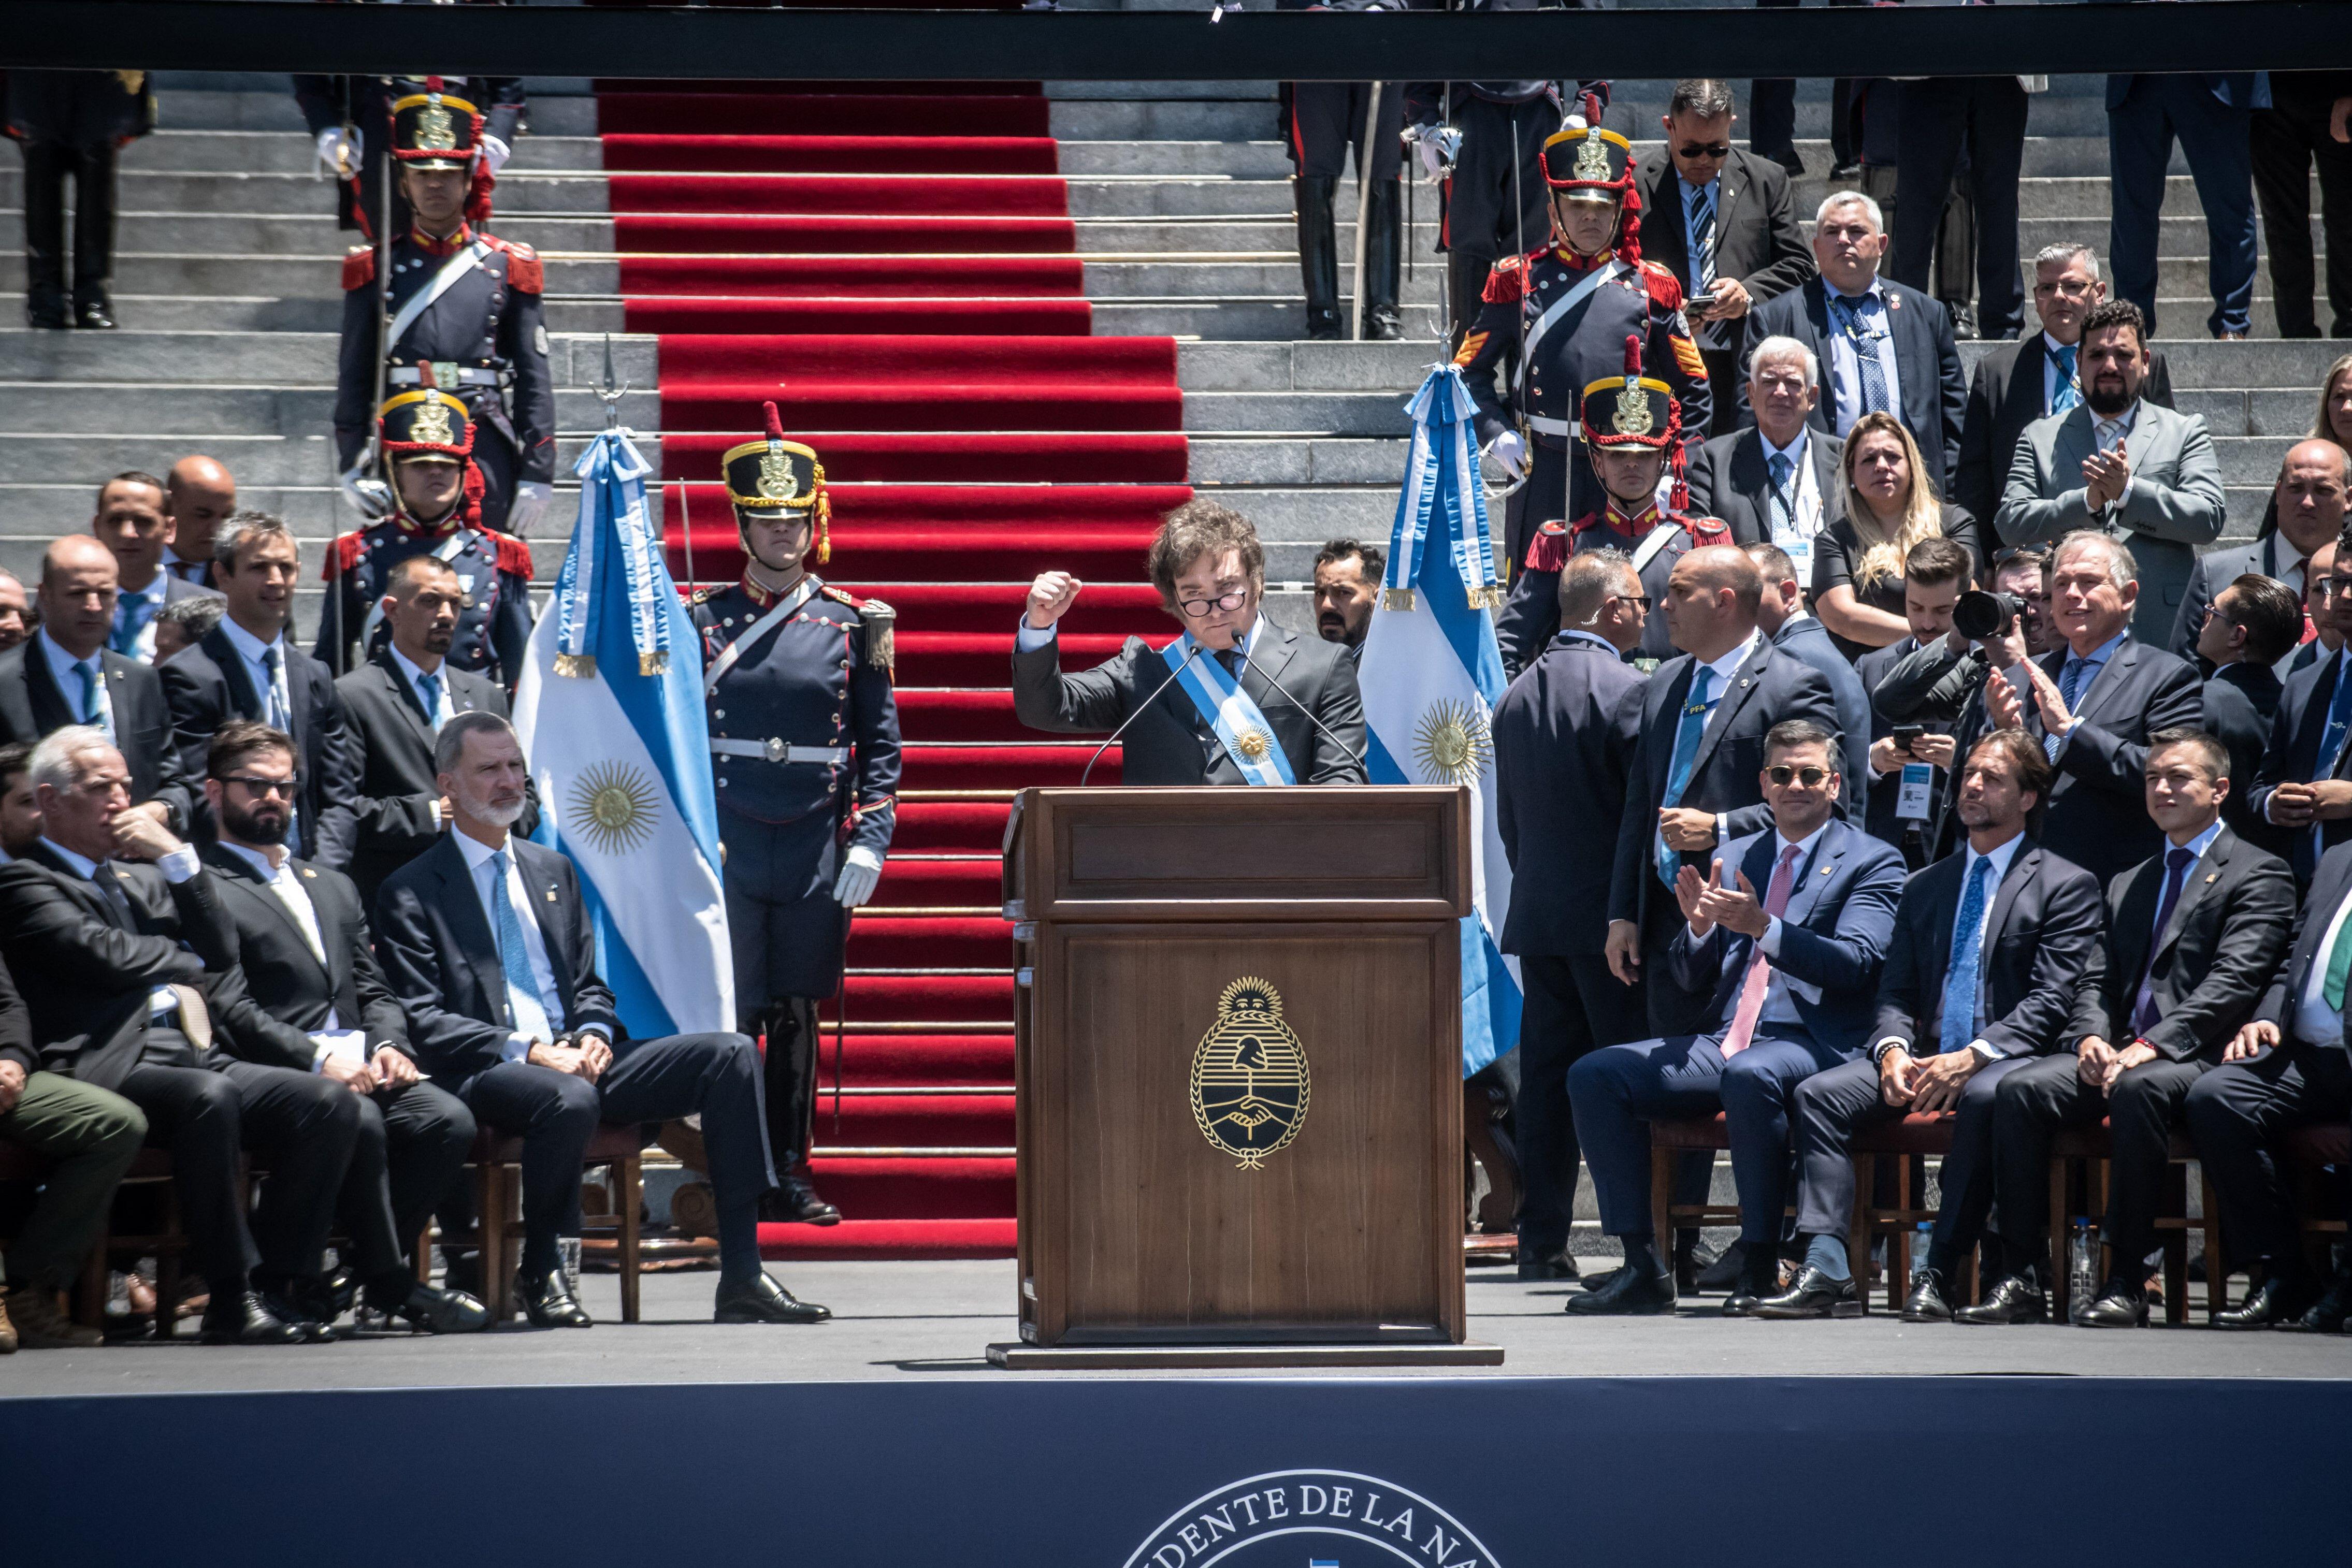 ‘True freedom’ is not selfish, archbishop tells Argentine president